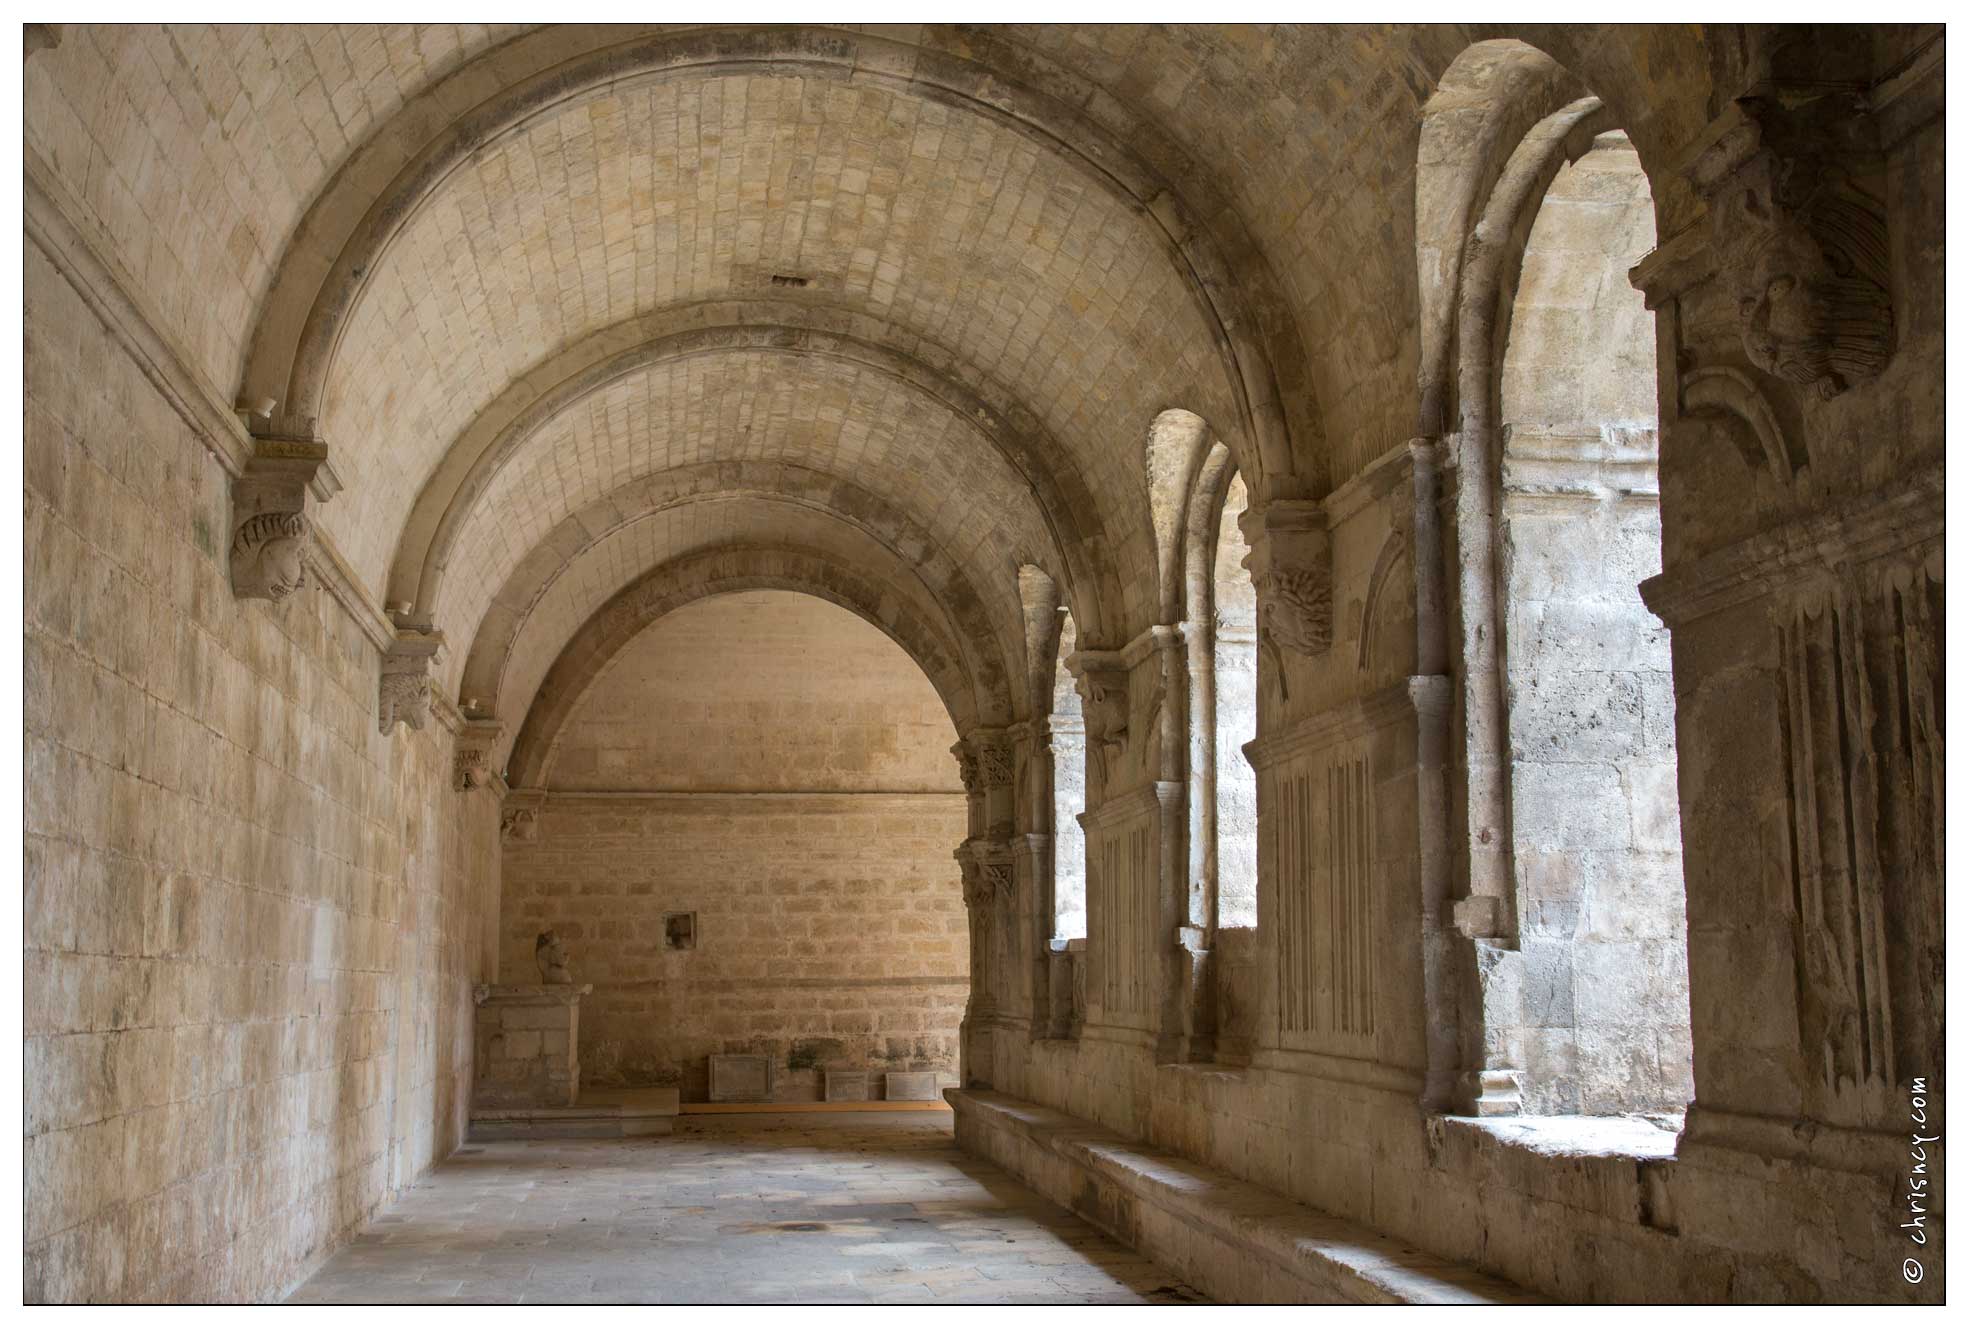 20160123-17_6748-Arles_Abbaye_de_Montmajour_le_cloitre.jpg